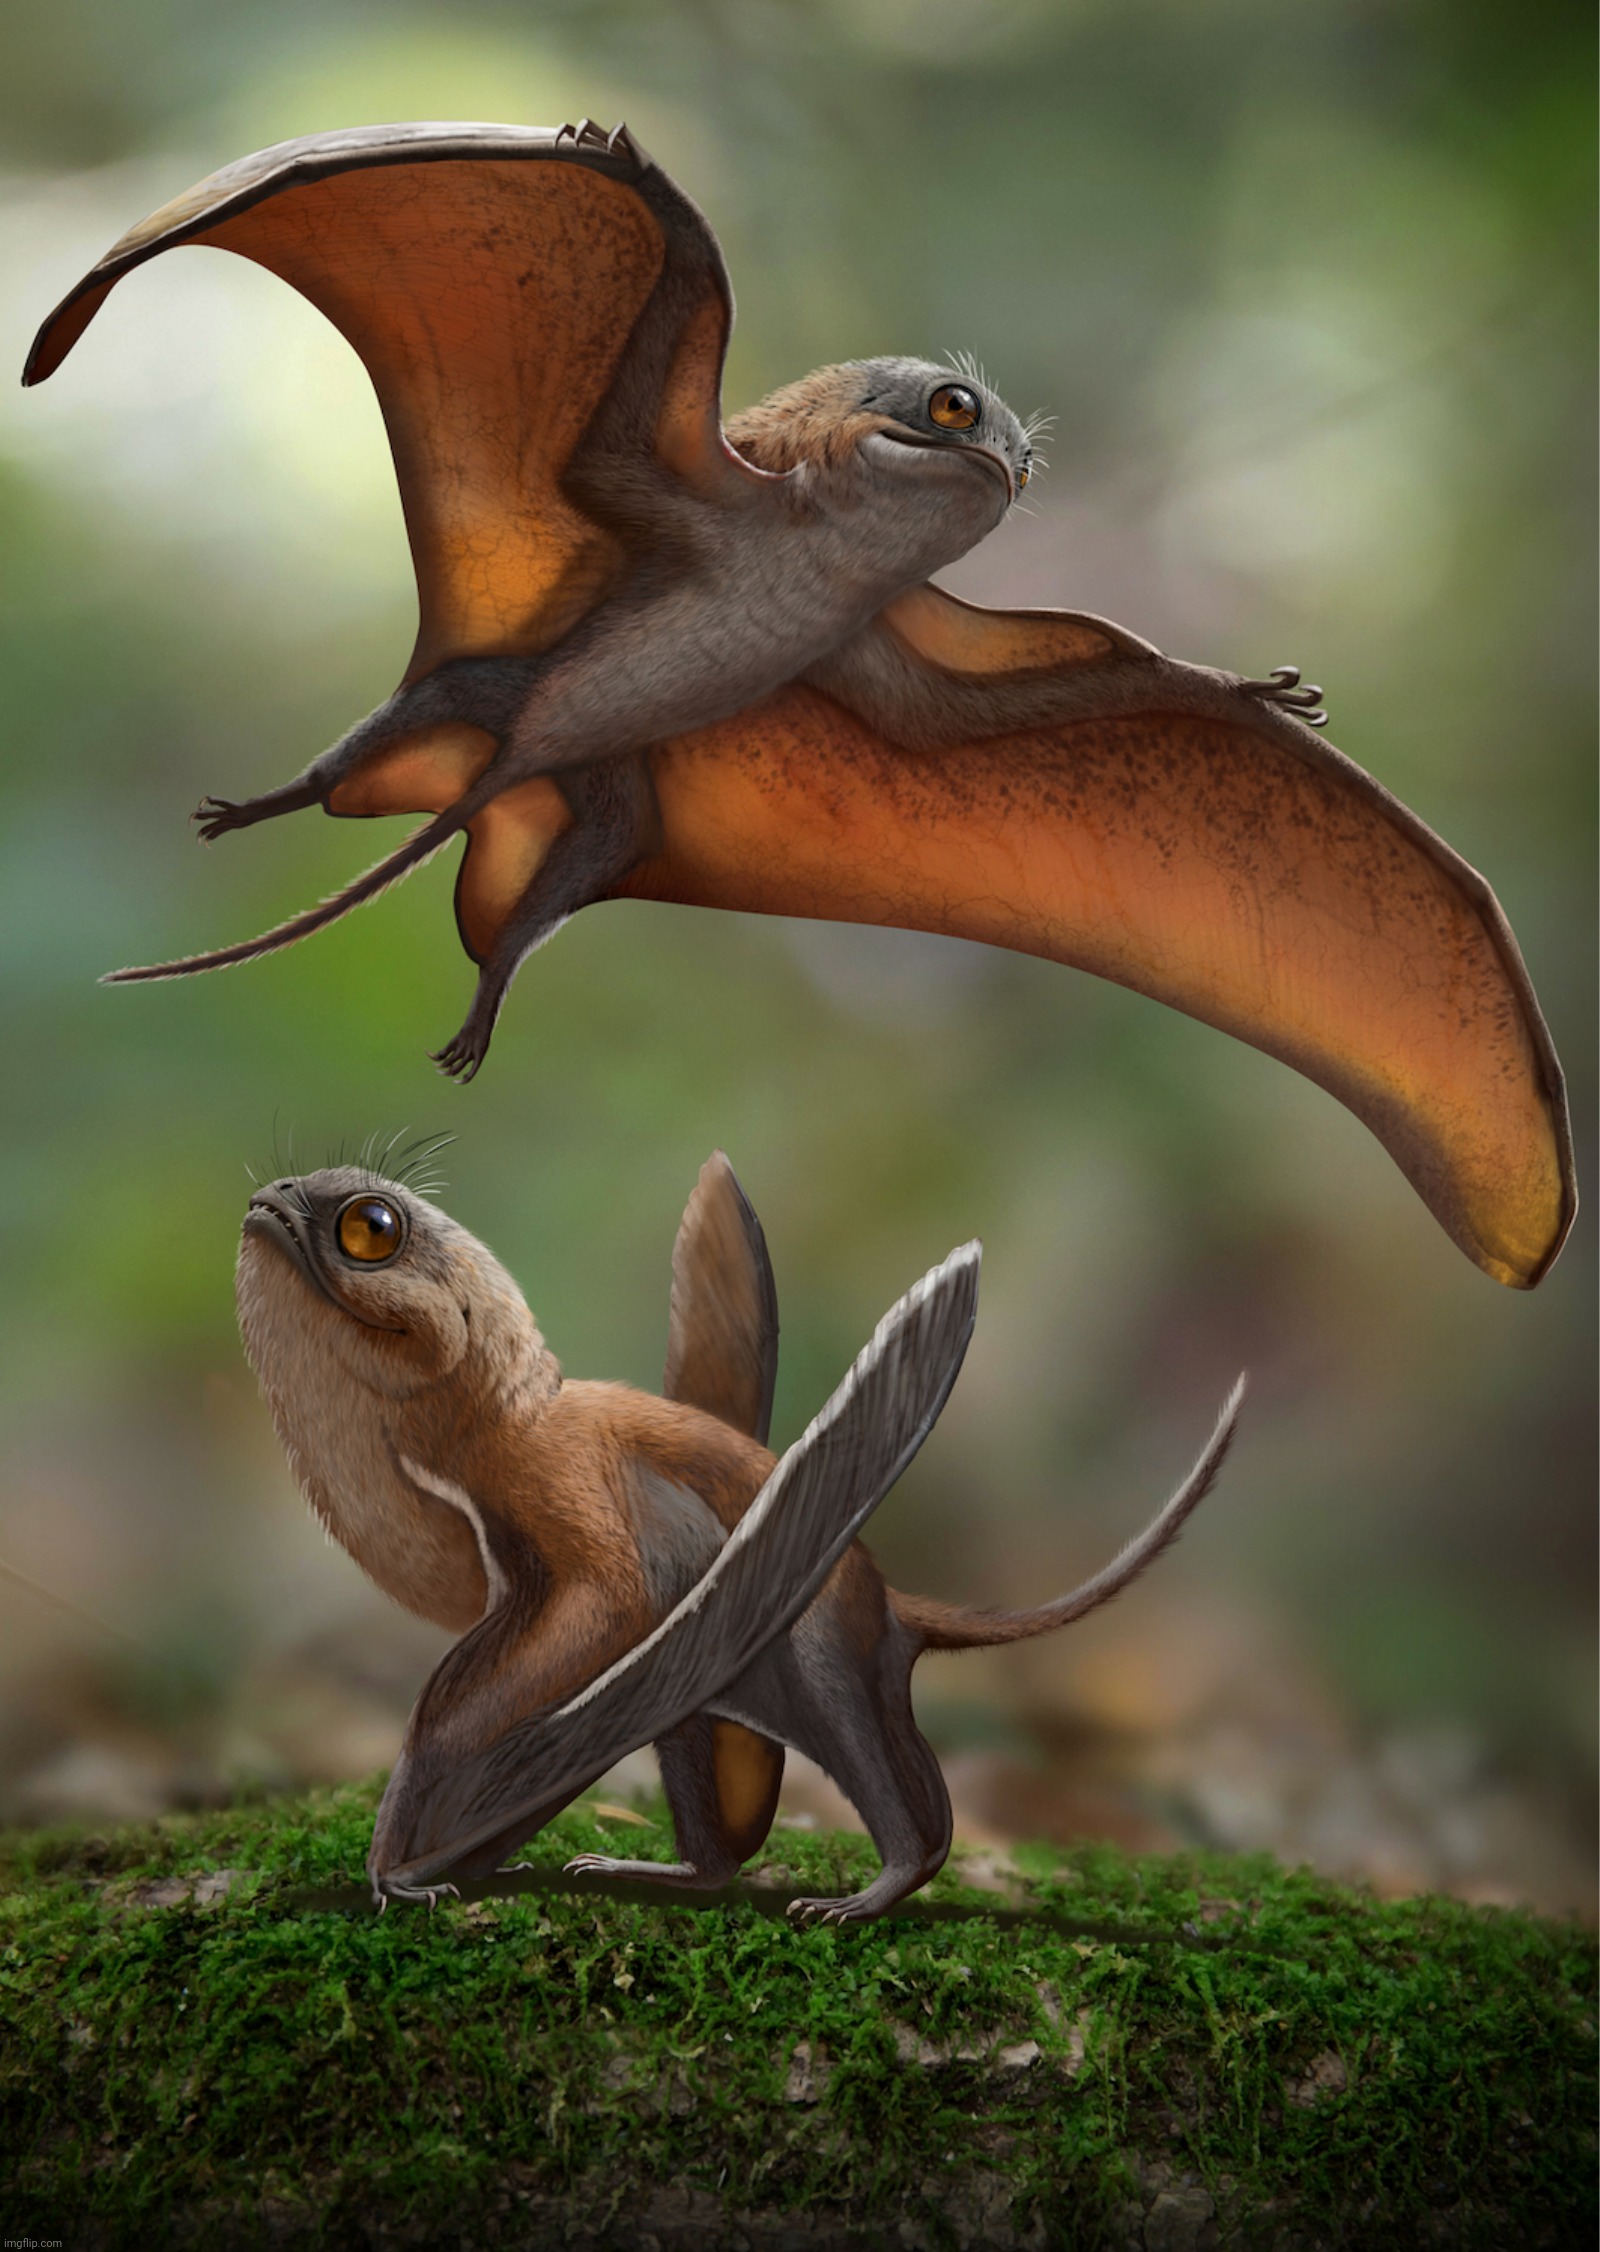 Sinomacrops bondei, tiny pterosaur which may have led bat-like life | image tagged in sinomacrops bondei,pterosaur | made w/ Imgflip meme maker